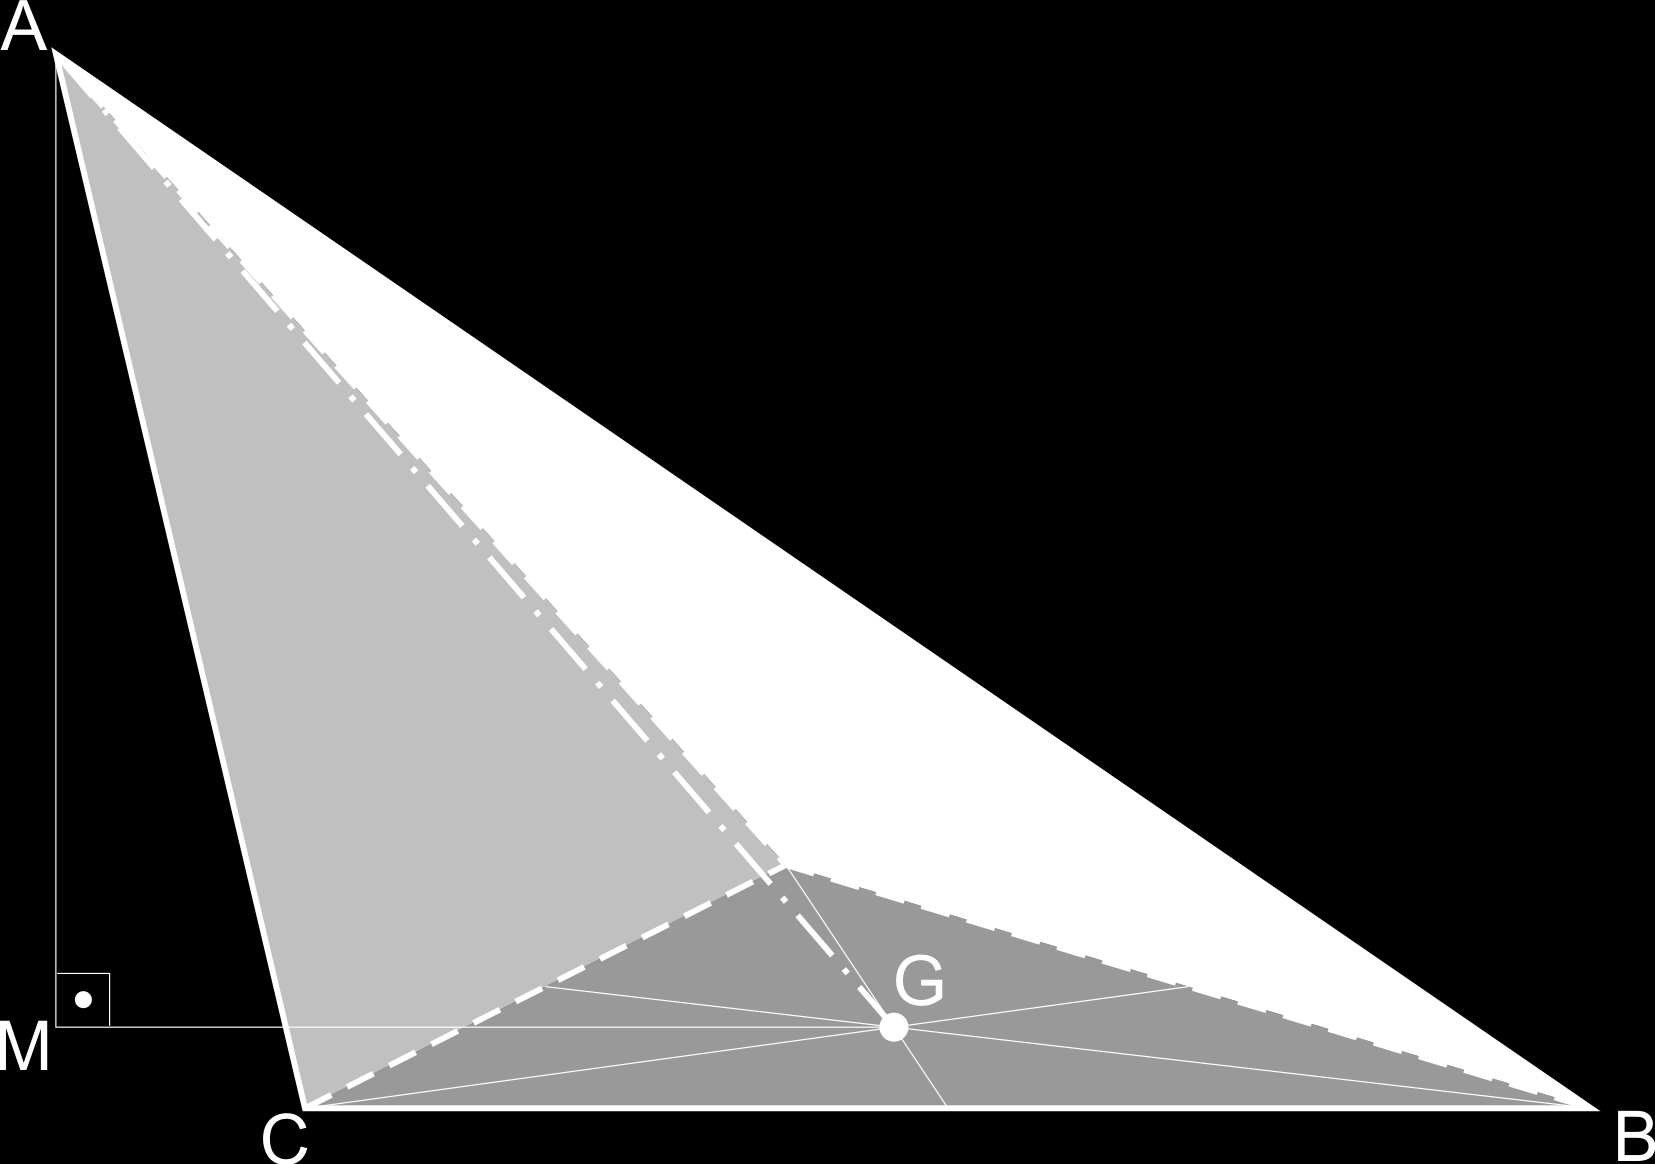 ABCD - triangular irregular obĺıqua AM - Altura da pirâmide A